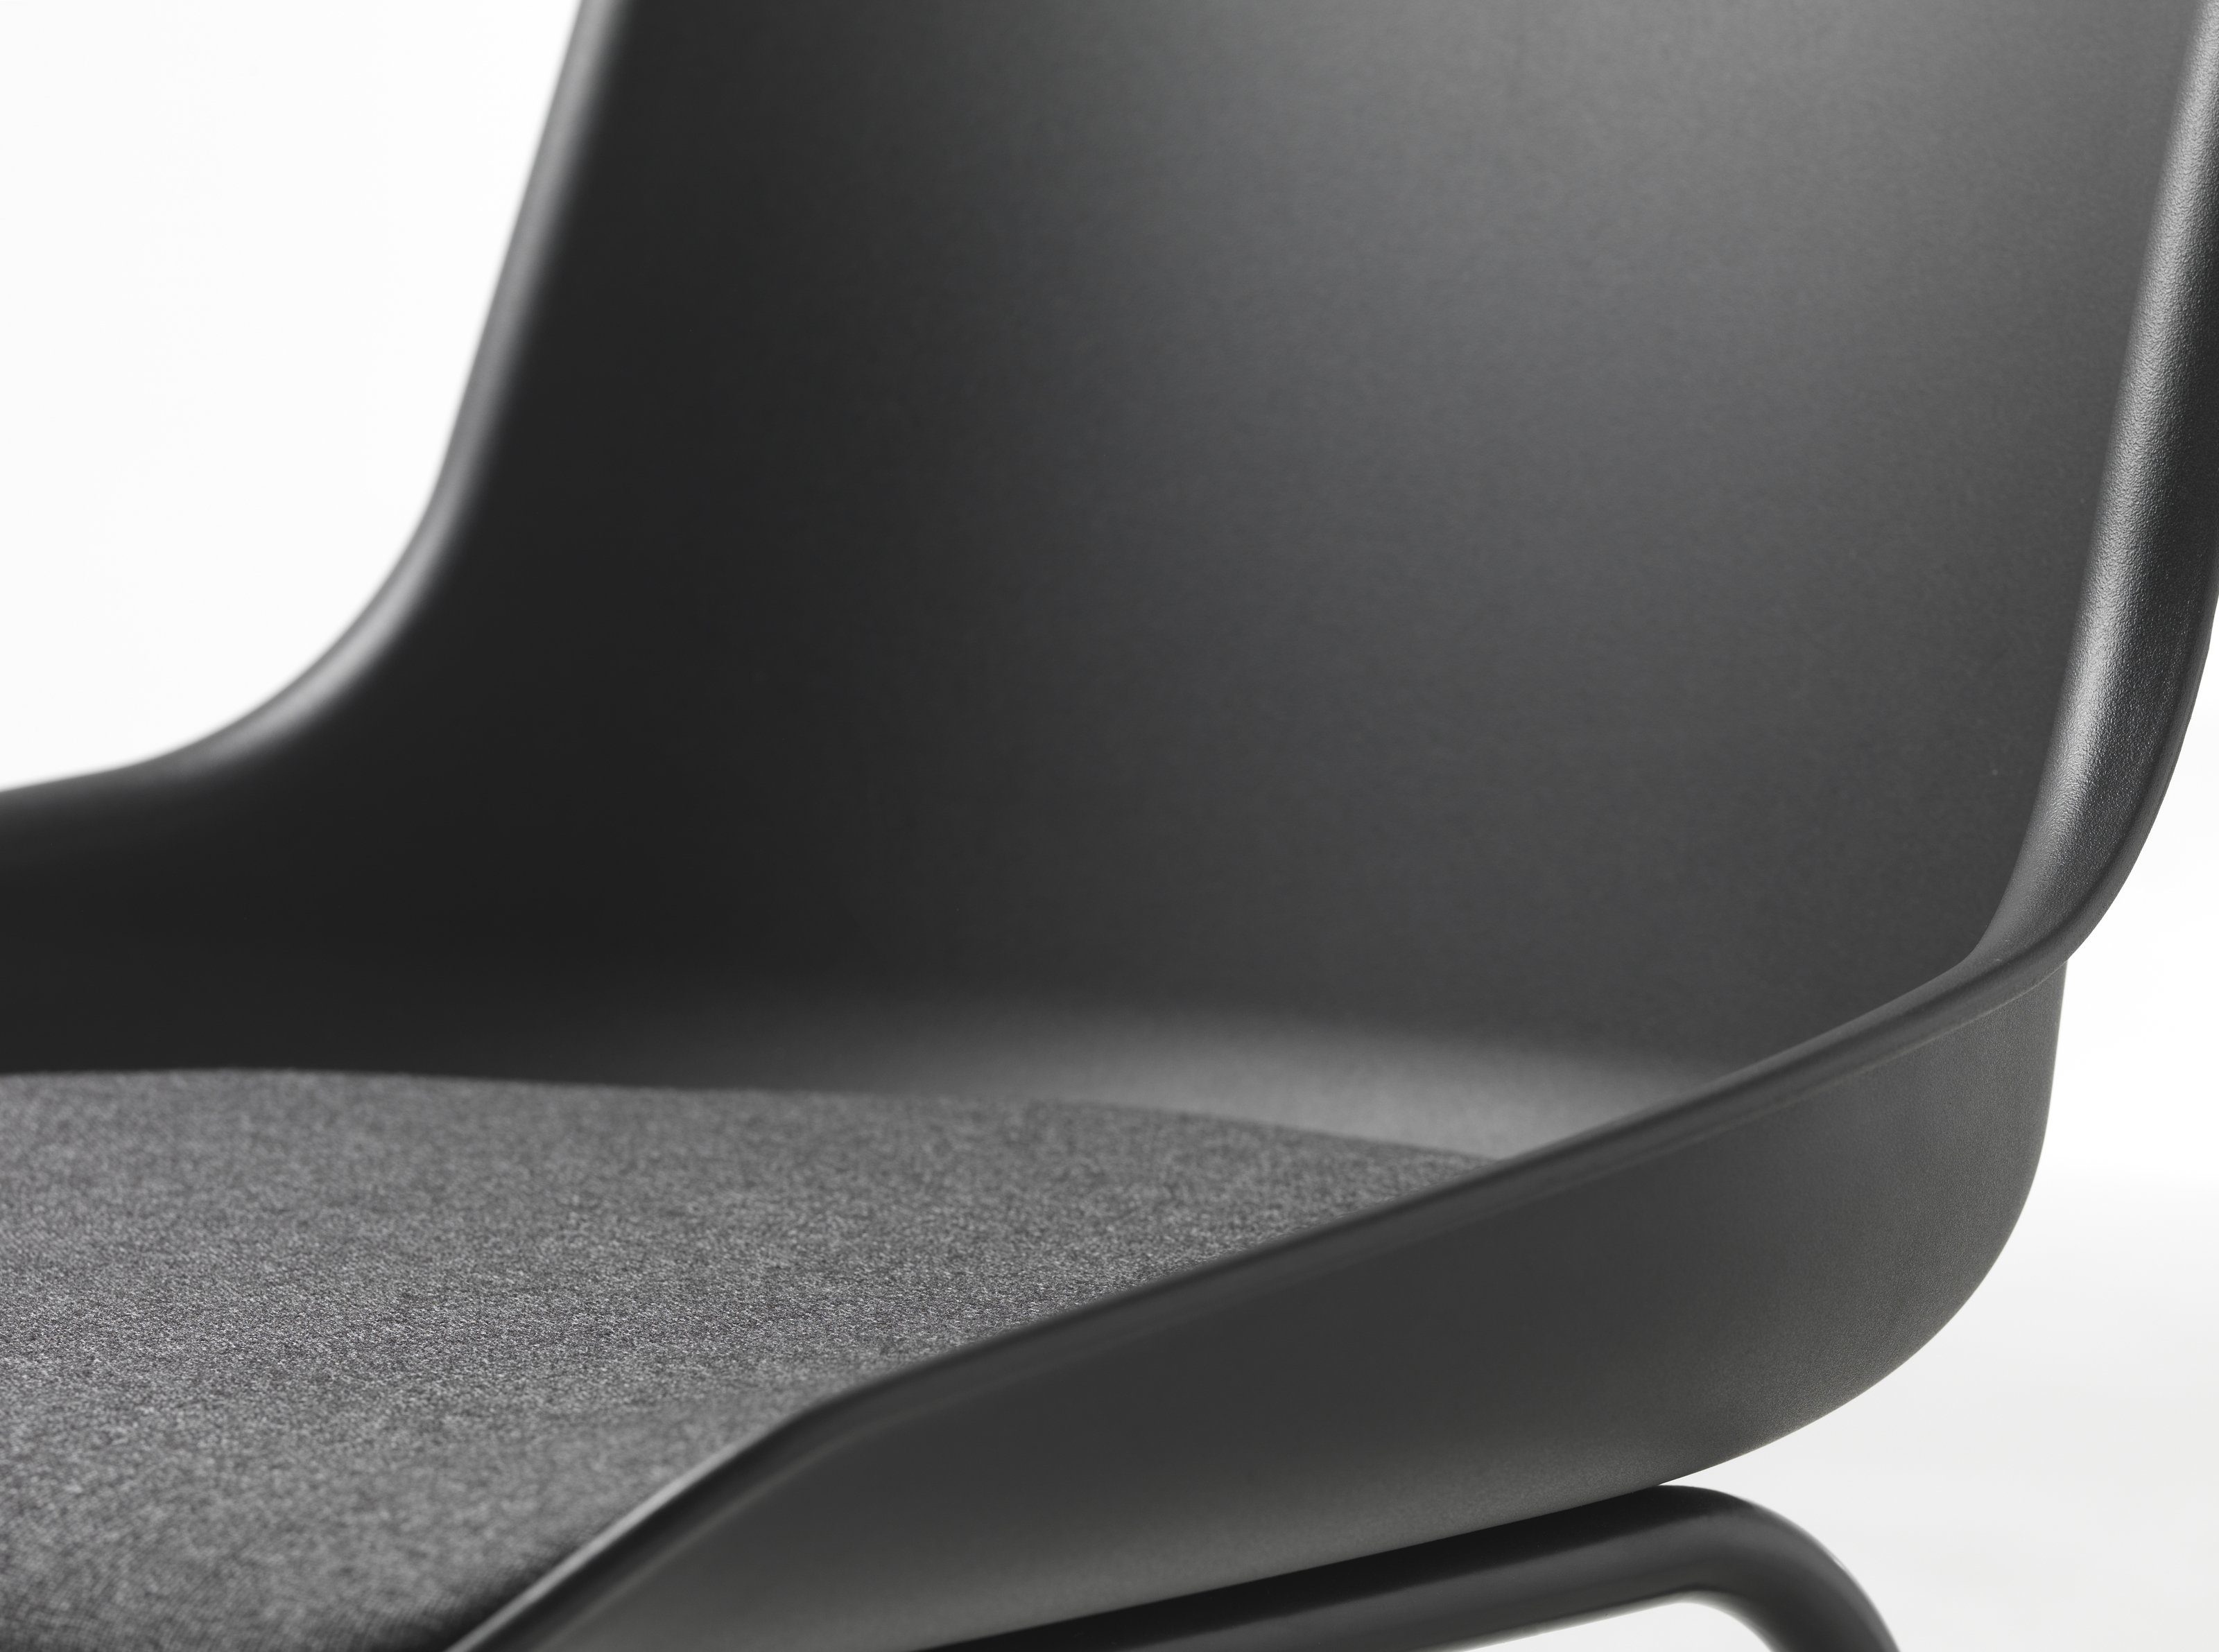 Stuhl (2er-Set), TOPLEY in möbelando aus Metall/Kunststoff schwarz